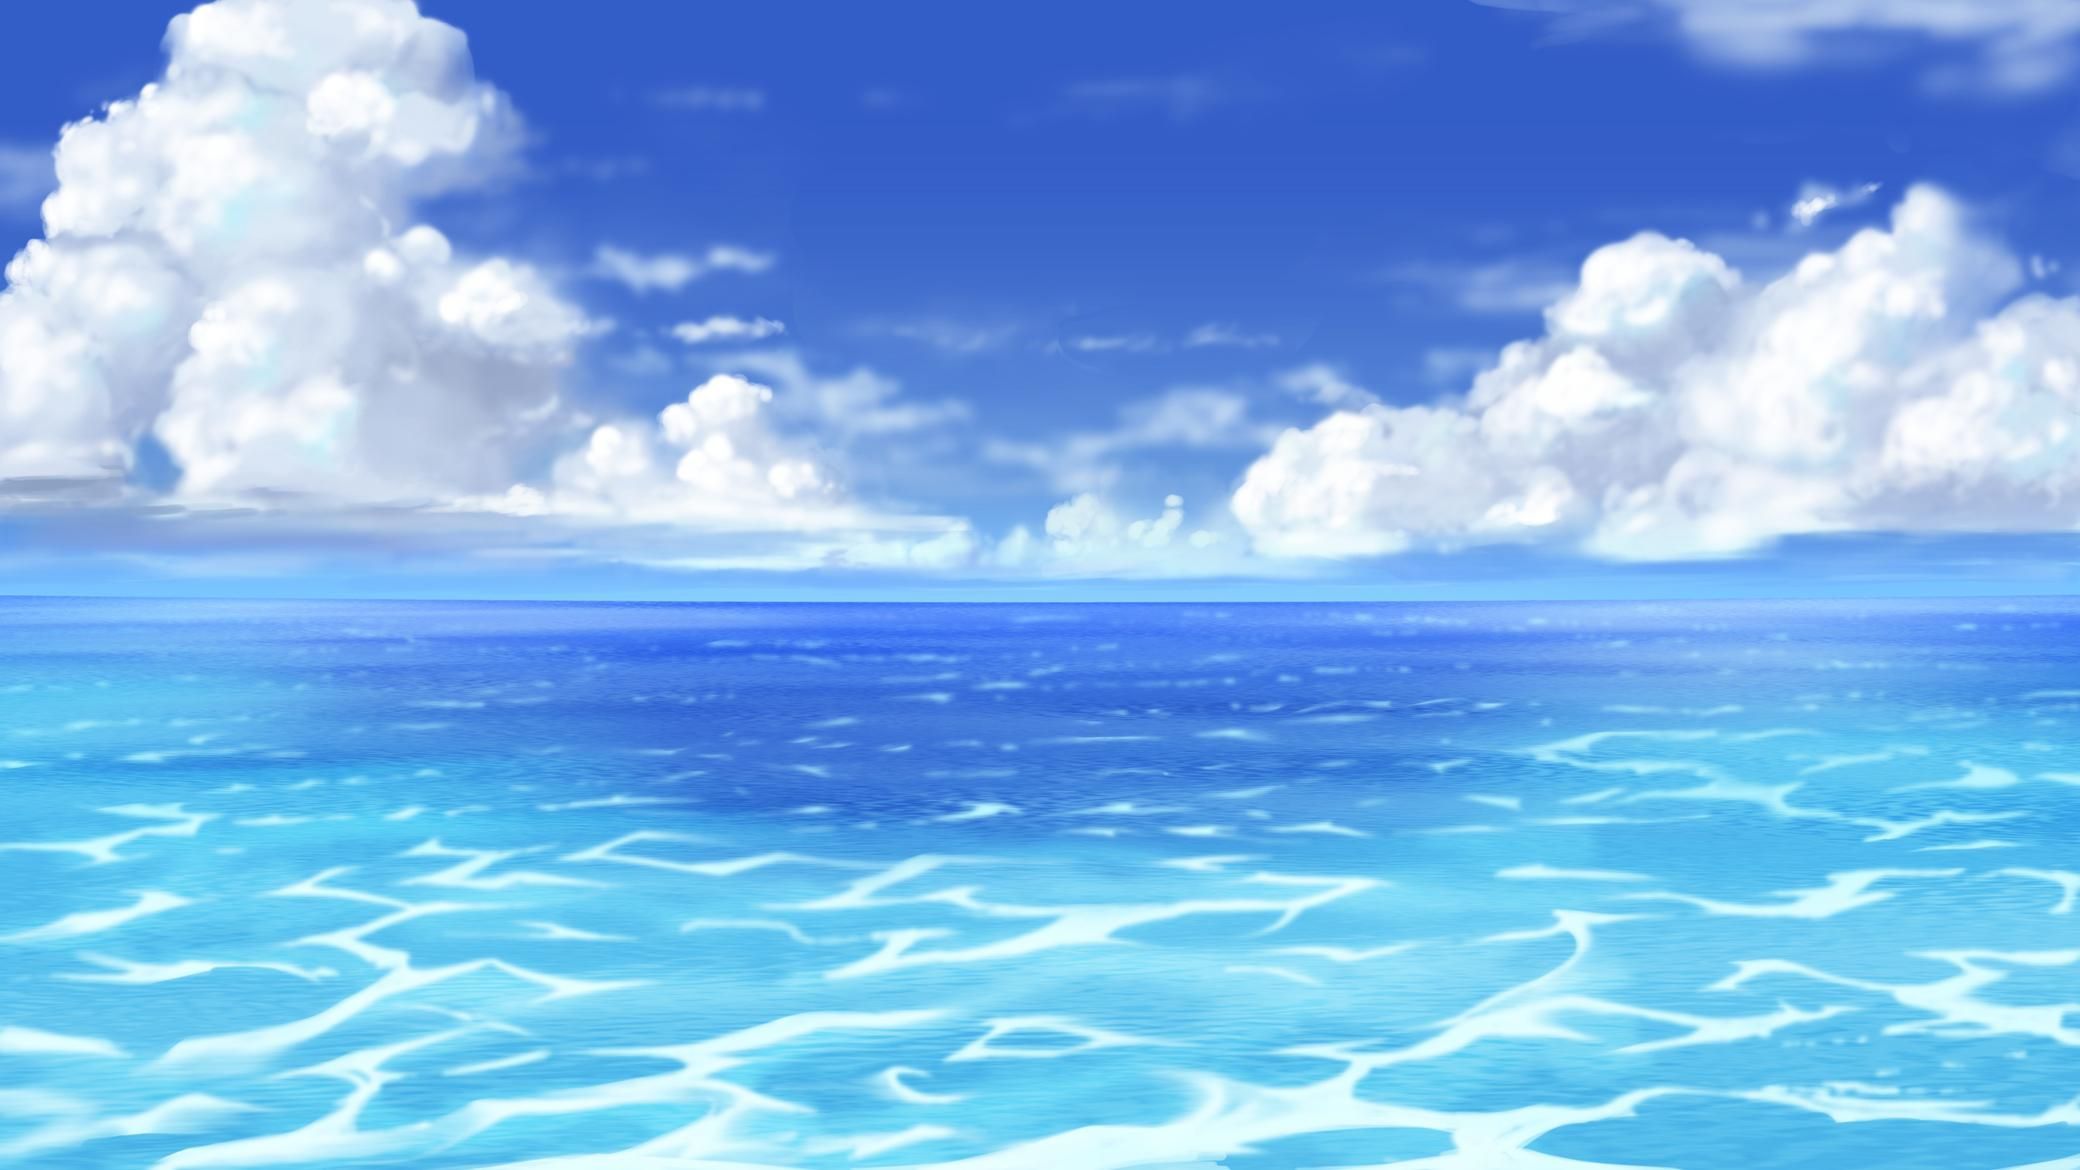 Sunset & Sea Waves Desktop Wallpaper - Sea Waves Wallpaper 4k